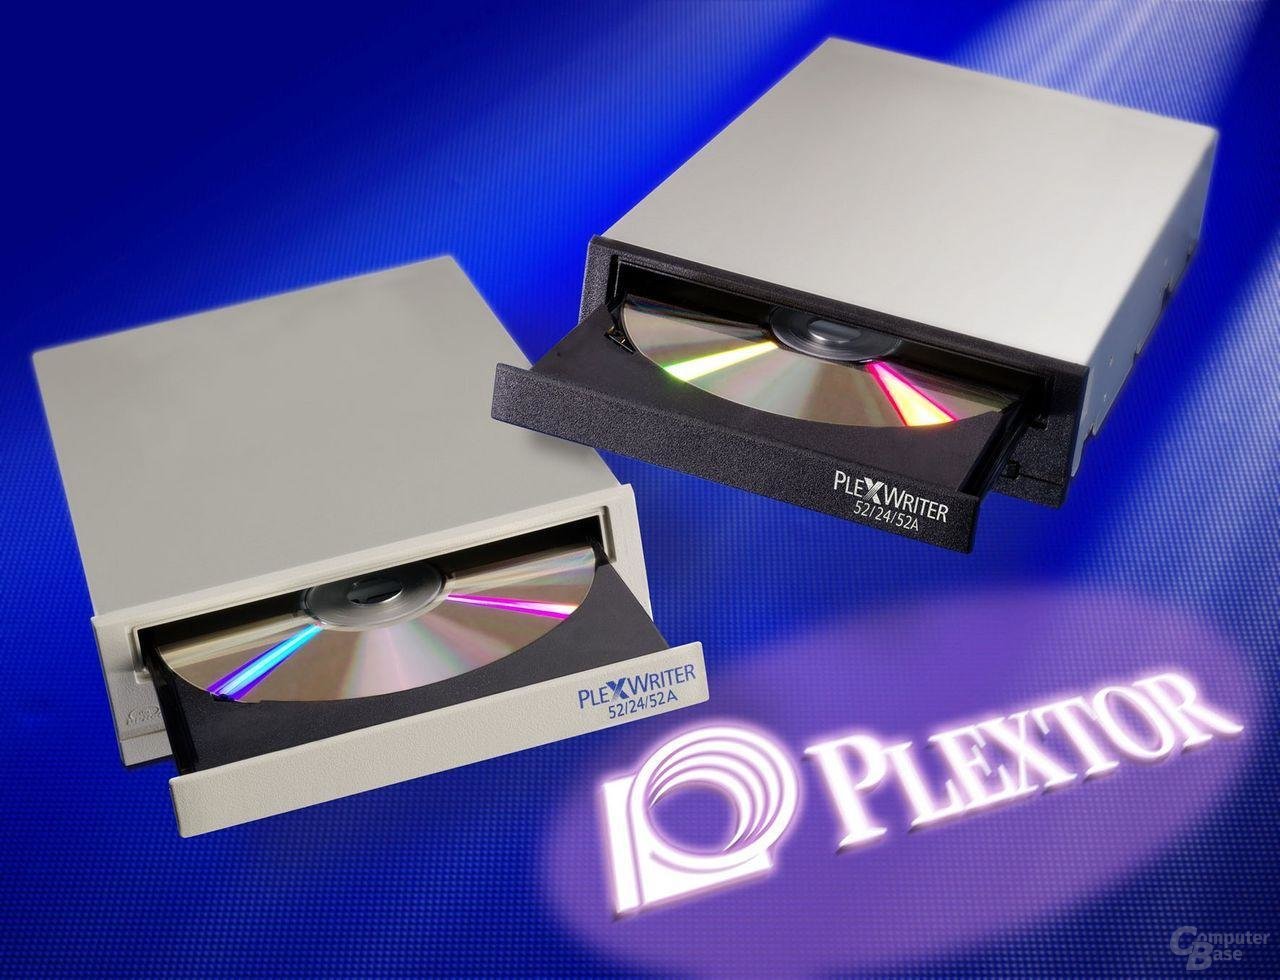 Plextor PlexWriter 522452A High.JPG